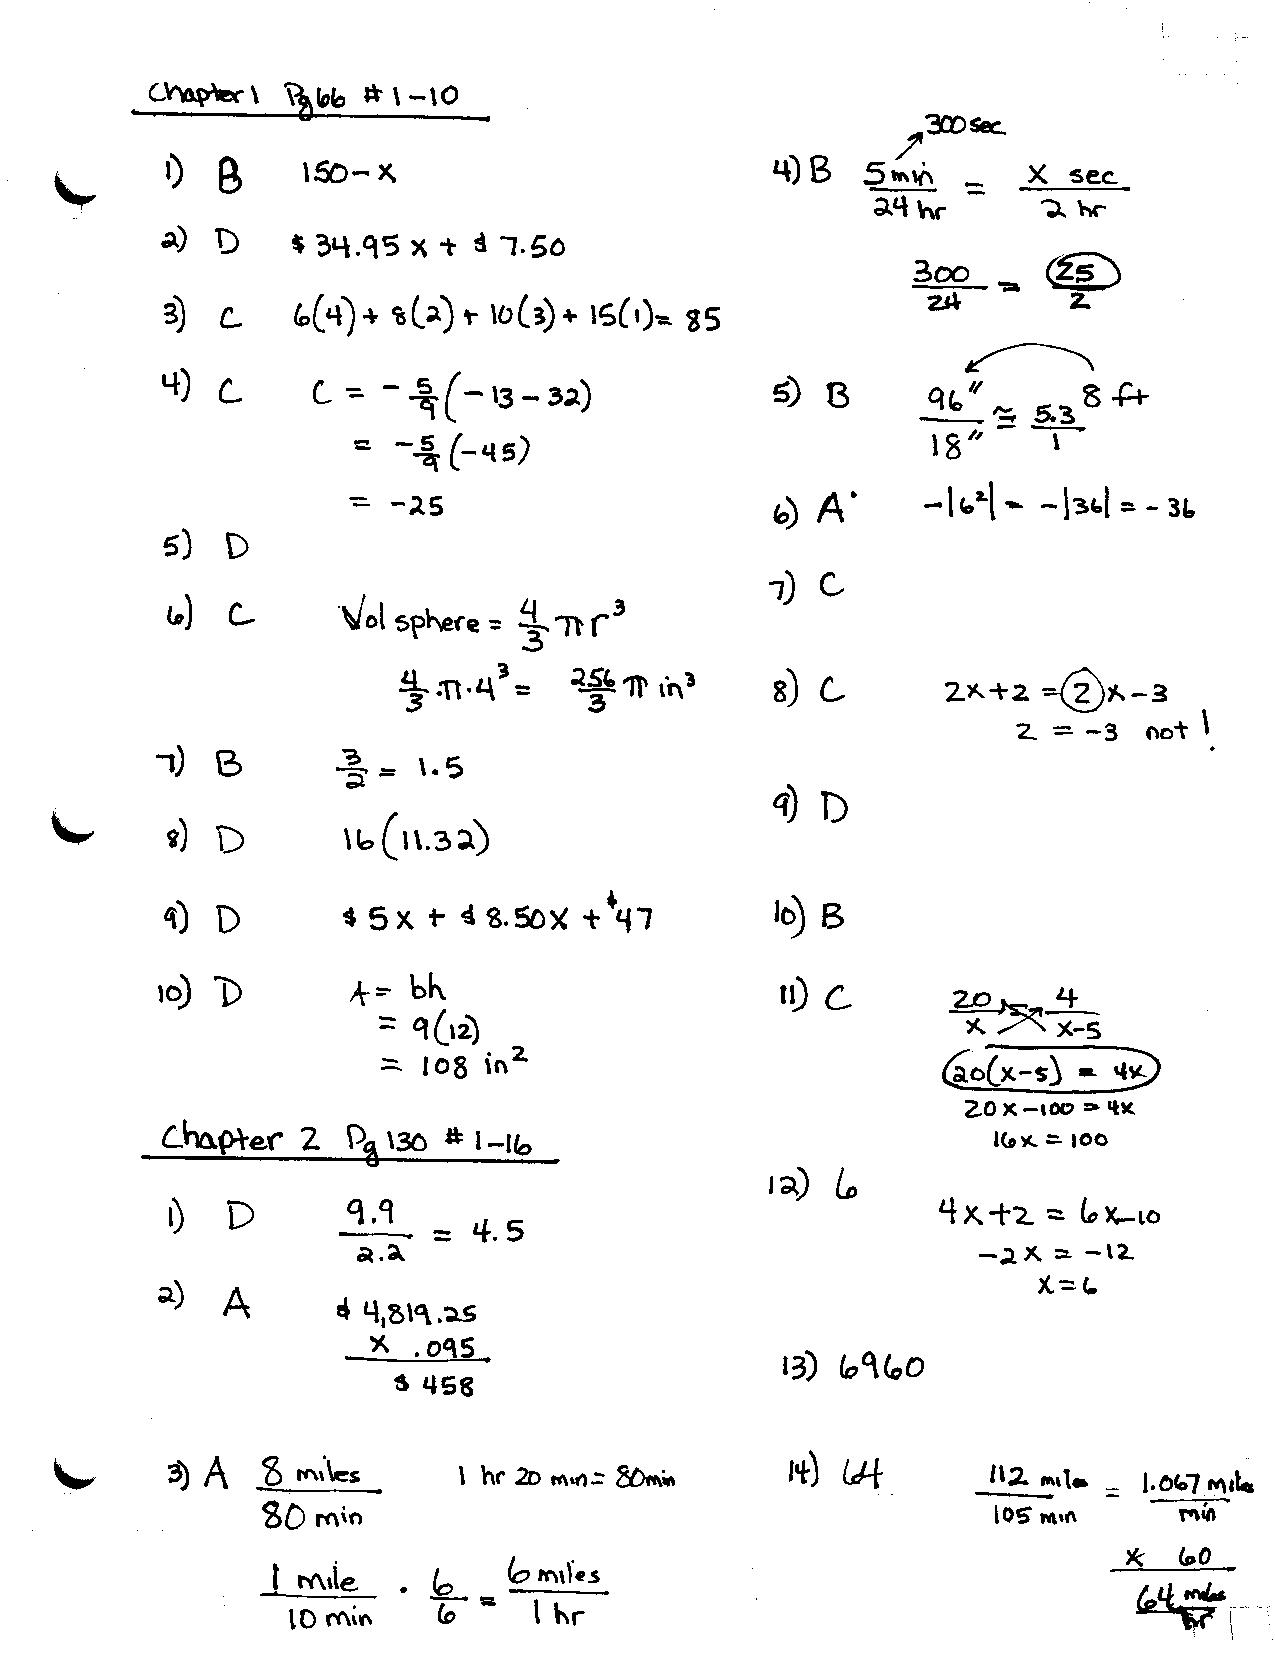 Chapter 3 Practice Test Algebra 1 Answer Key Image